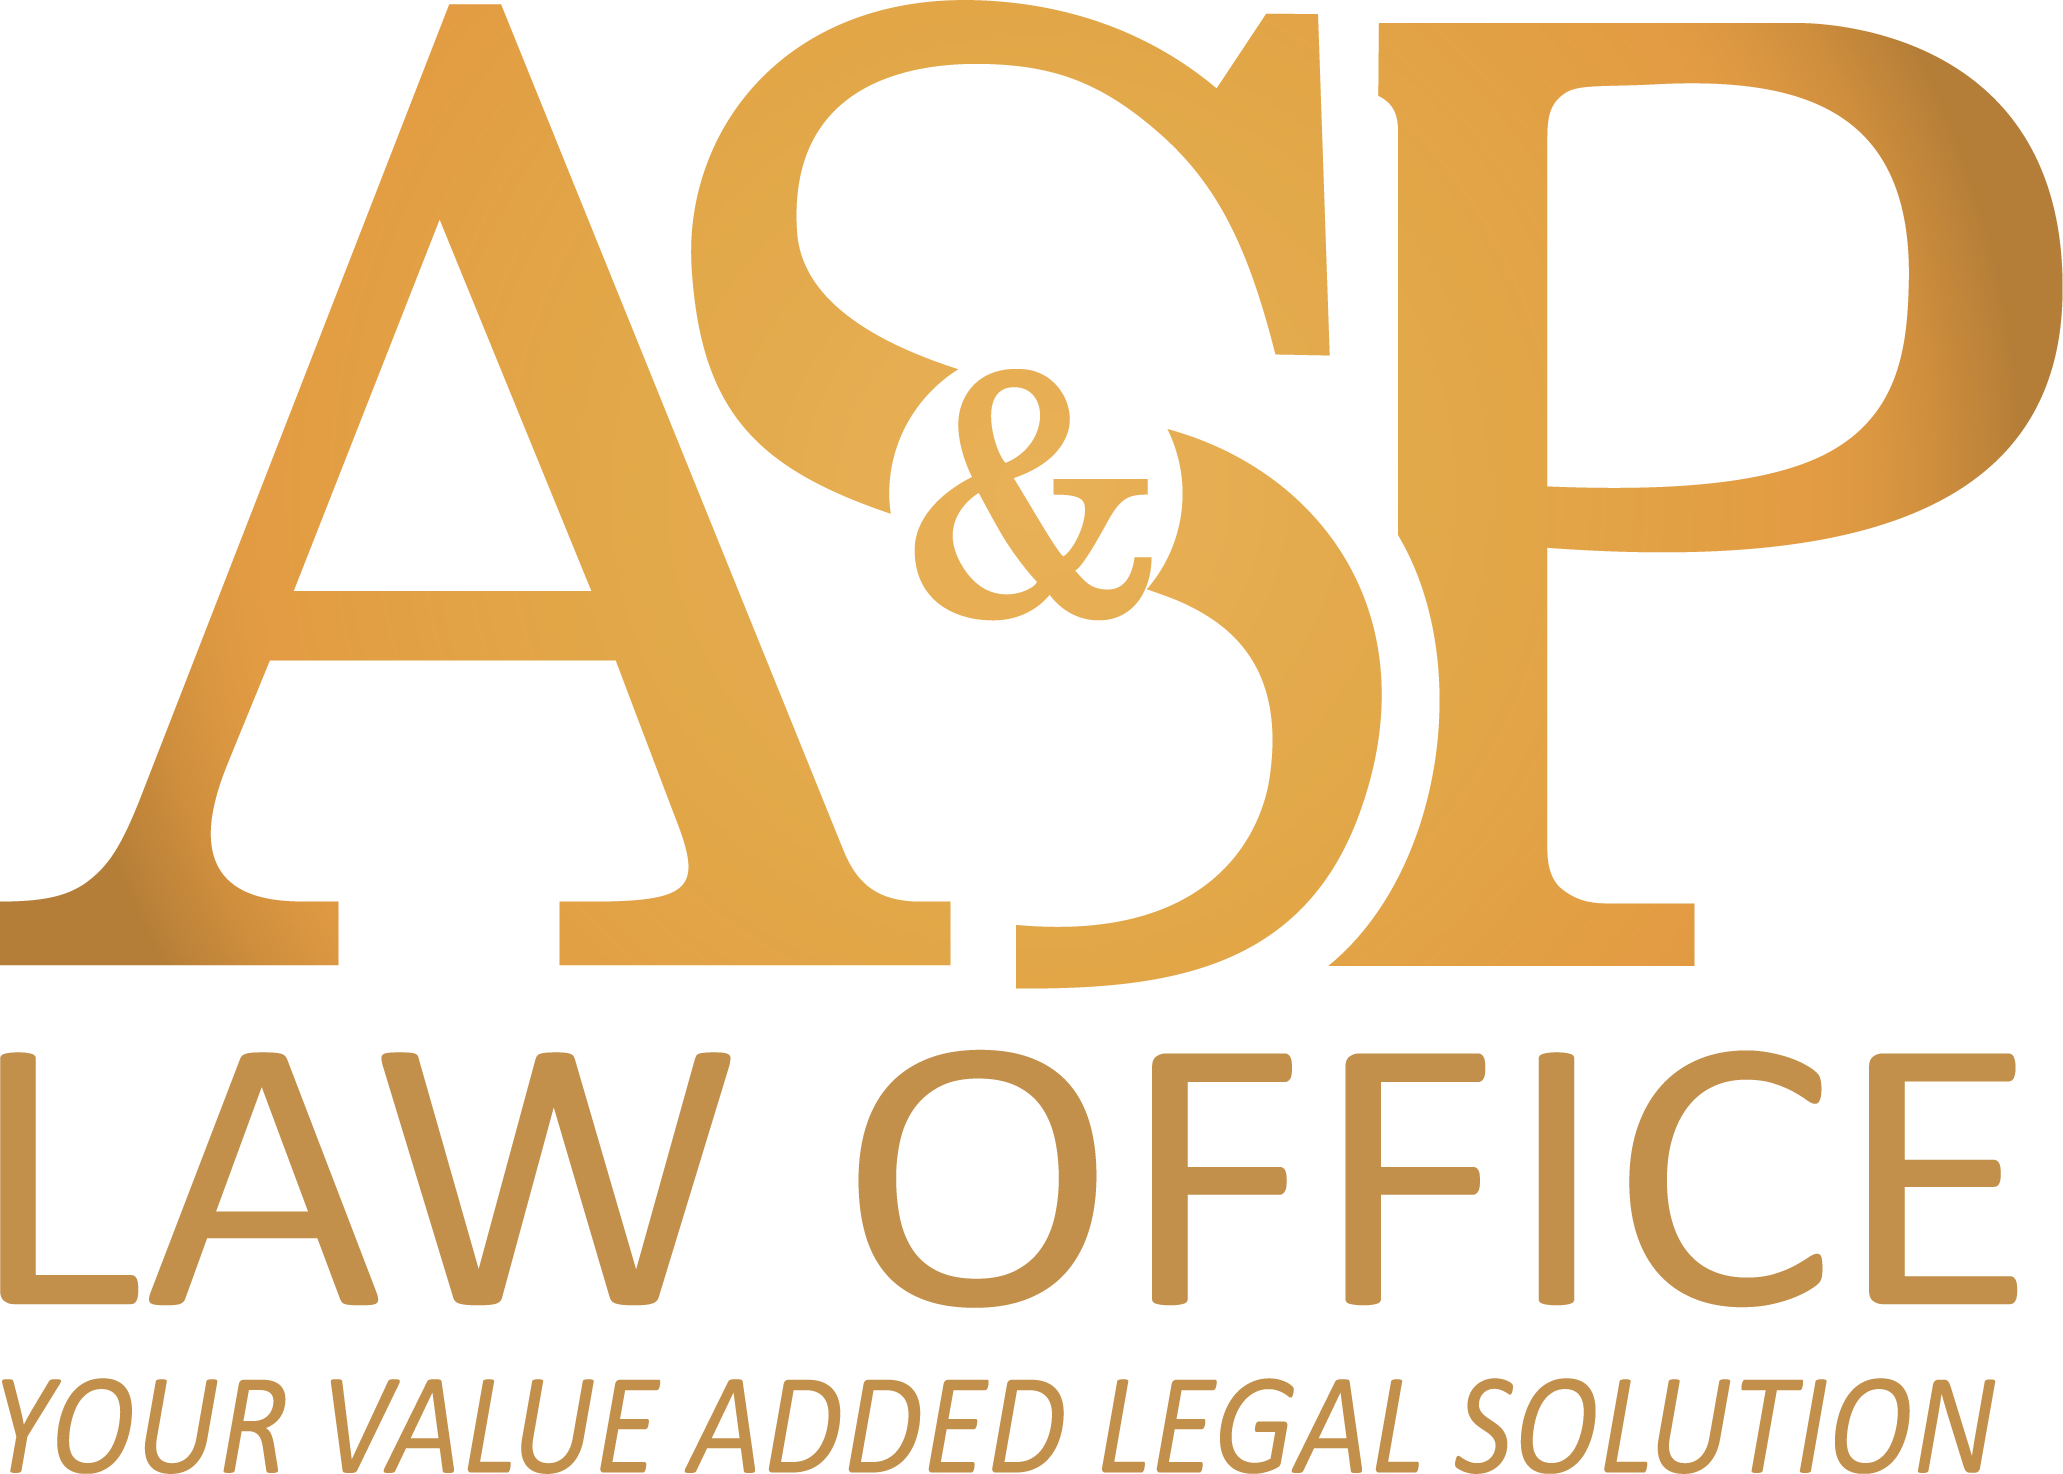 ASP Law Office